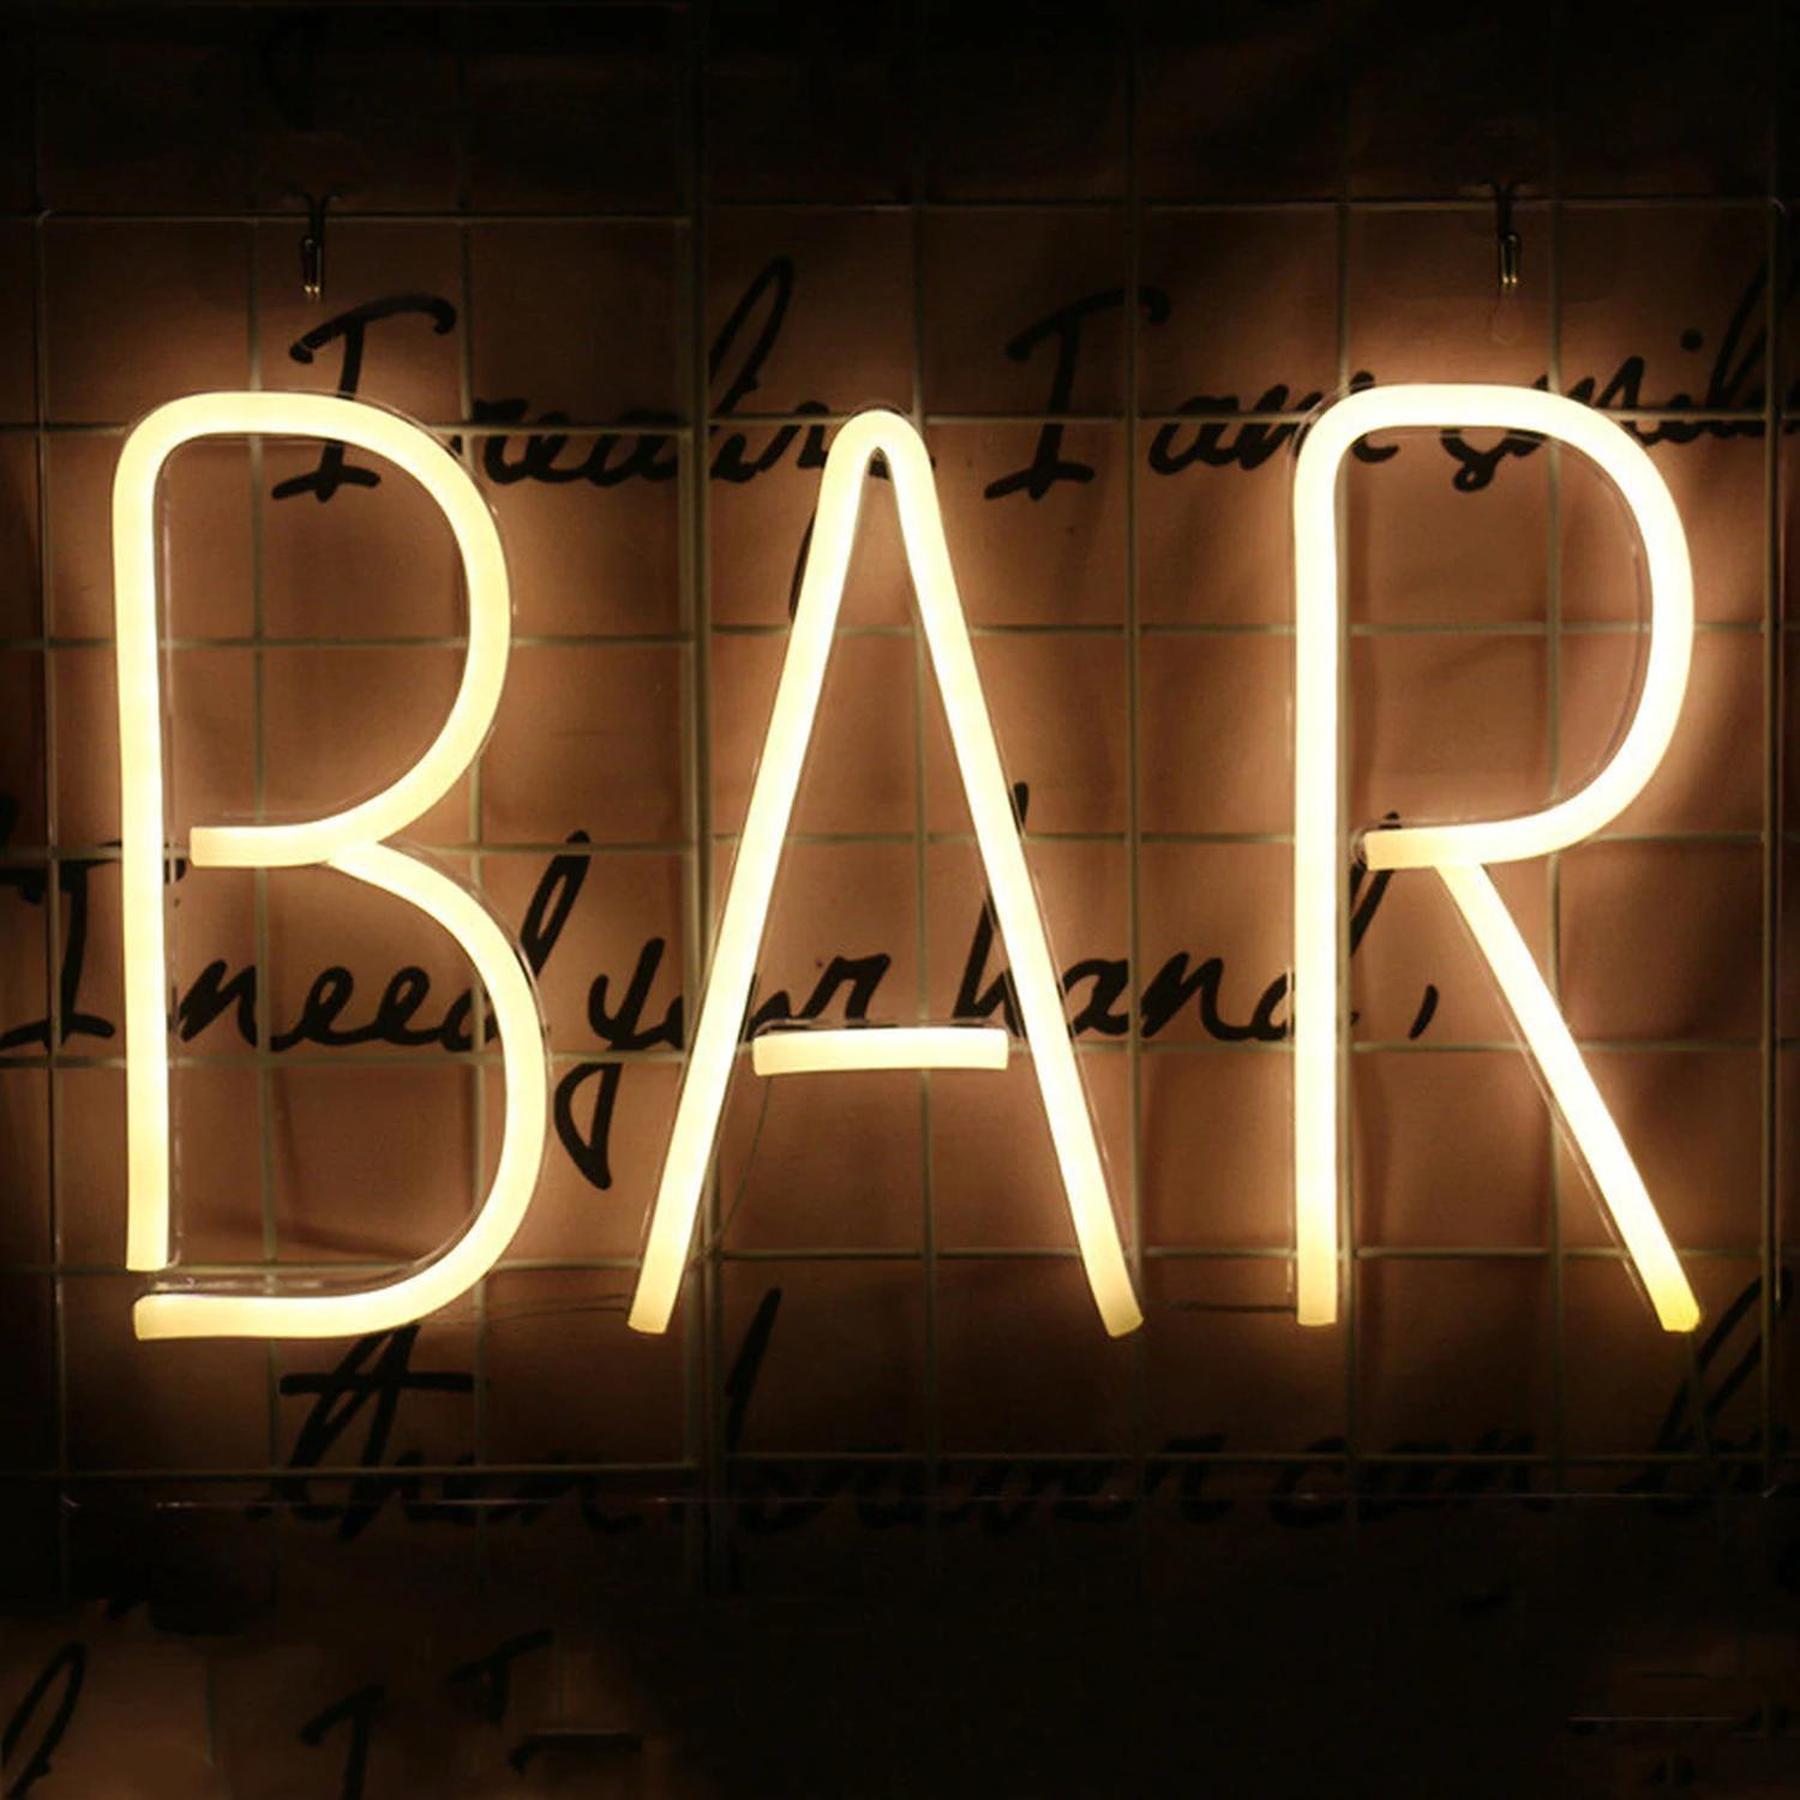 NEON LED Licht, dekorative Wand-Leuchte, Bar, ca. 40 x 30 x 2 cm